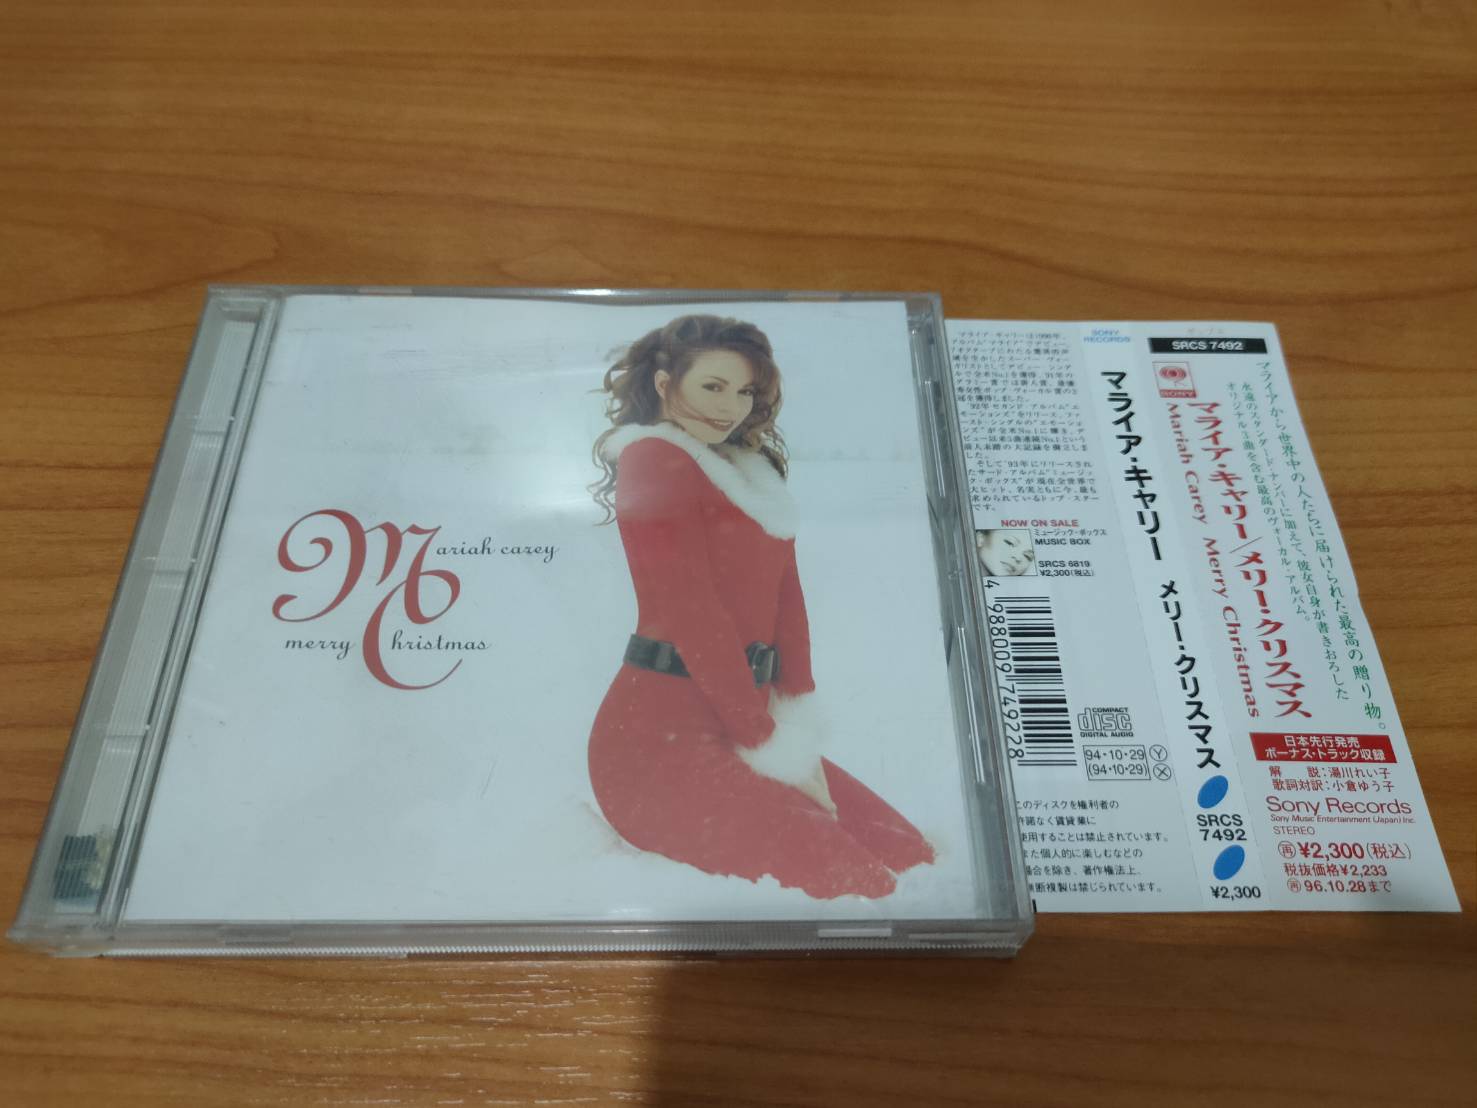 CD.MUSIC ซีดีเพลง เพลงสากล    Mariah Carey Merry Christmas  (***โปรดดูภาพสินค้าอย่างละเอียดก่อนทำการสั่งซื้อ*** )